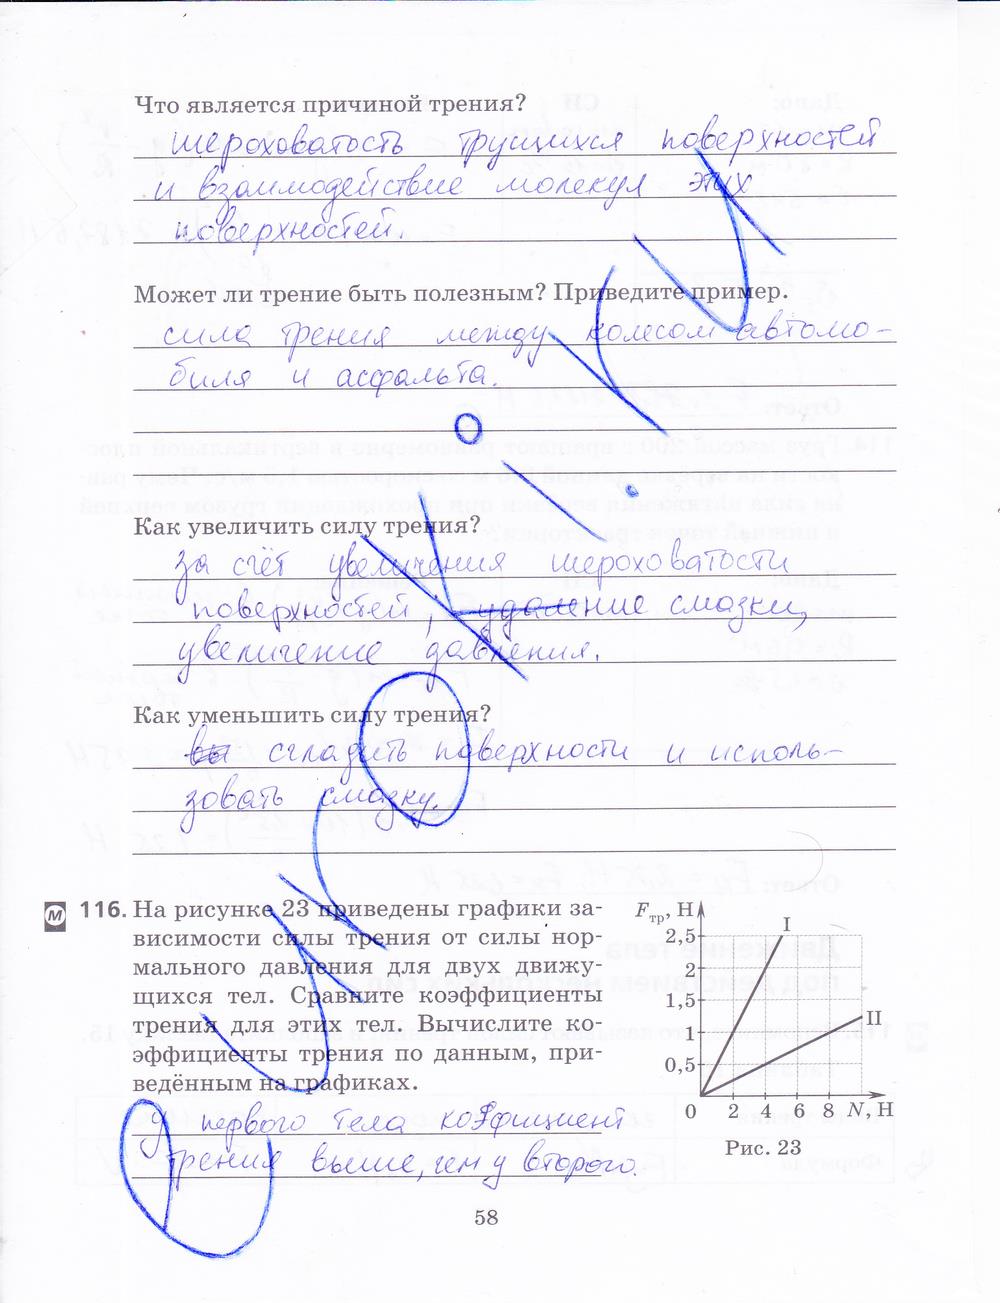 гдз 9 класс рабочая тетрадь страница 58 физика Пурышева, Важеевская, Чаругин